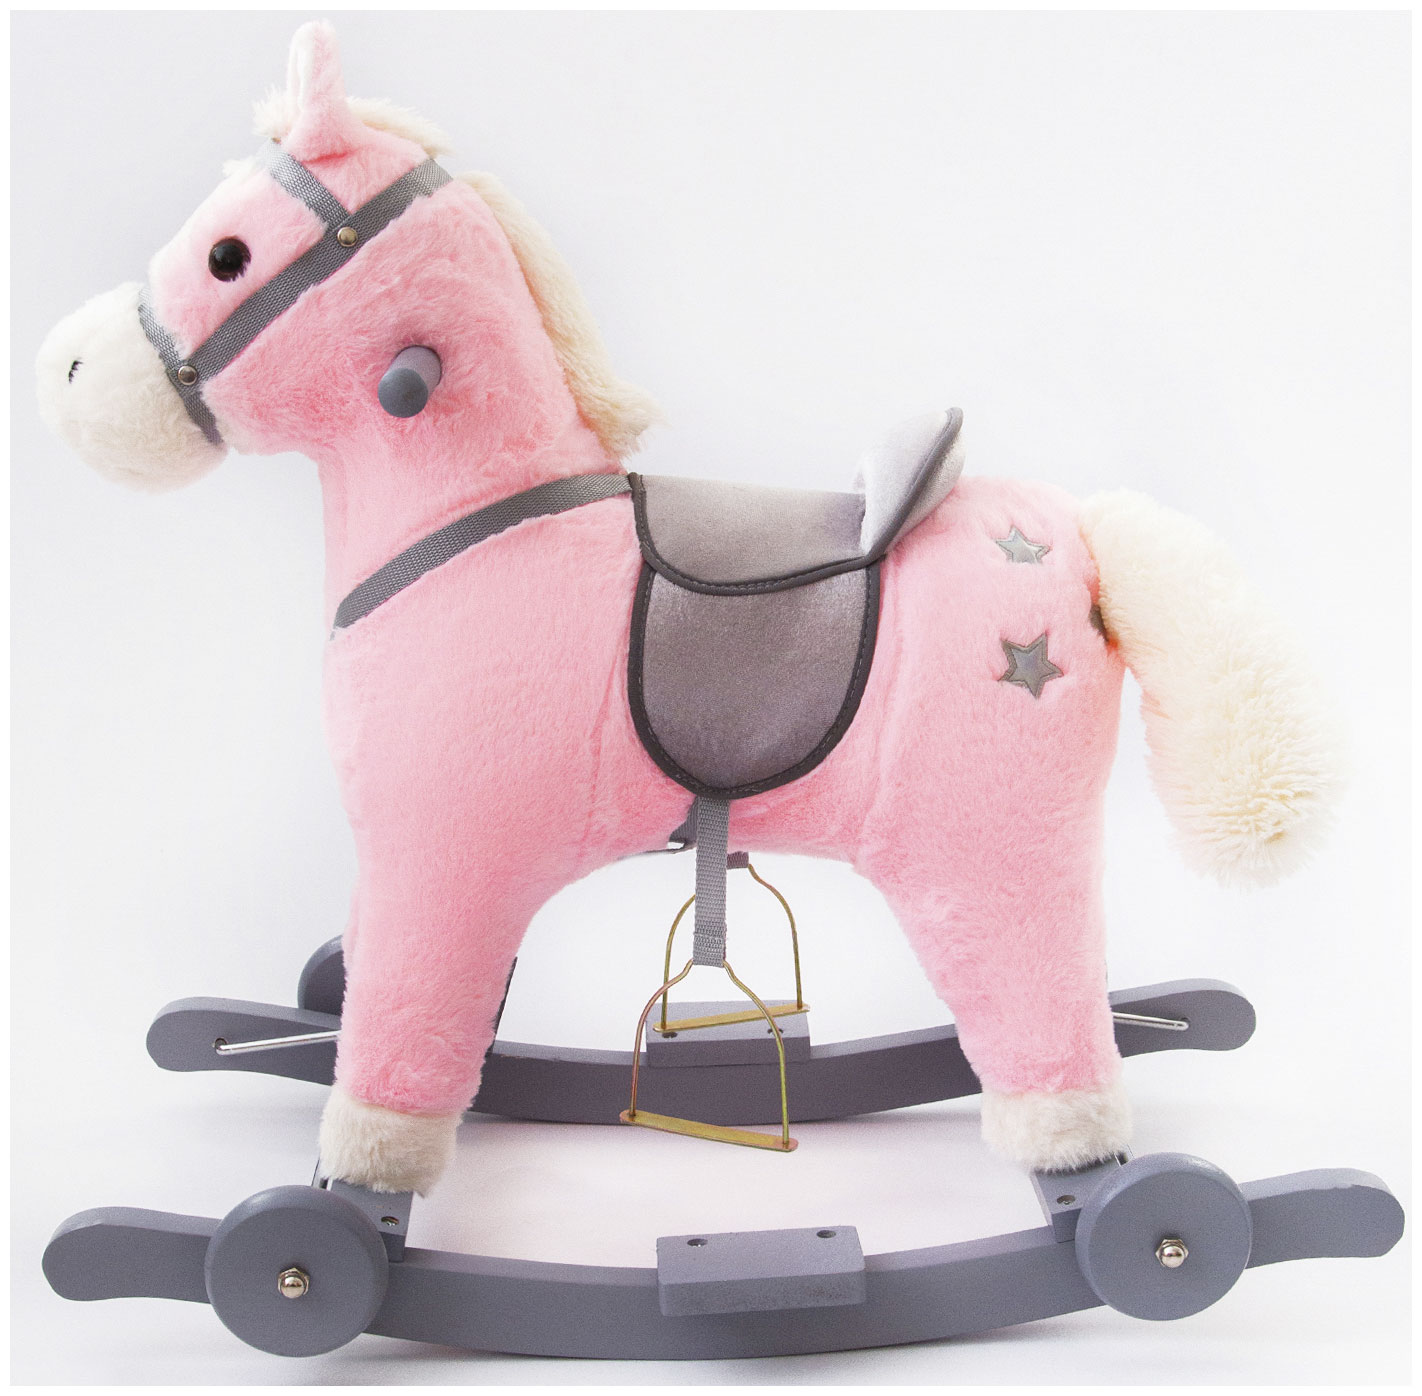 Лошадка каталка-качалка Amarobaby (Prime), с колесами, розовый, 63x35x60 см AMARO-28P-R0 качалки игрушки amarobaby лошадка west